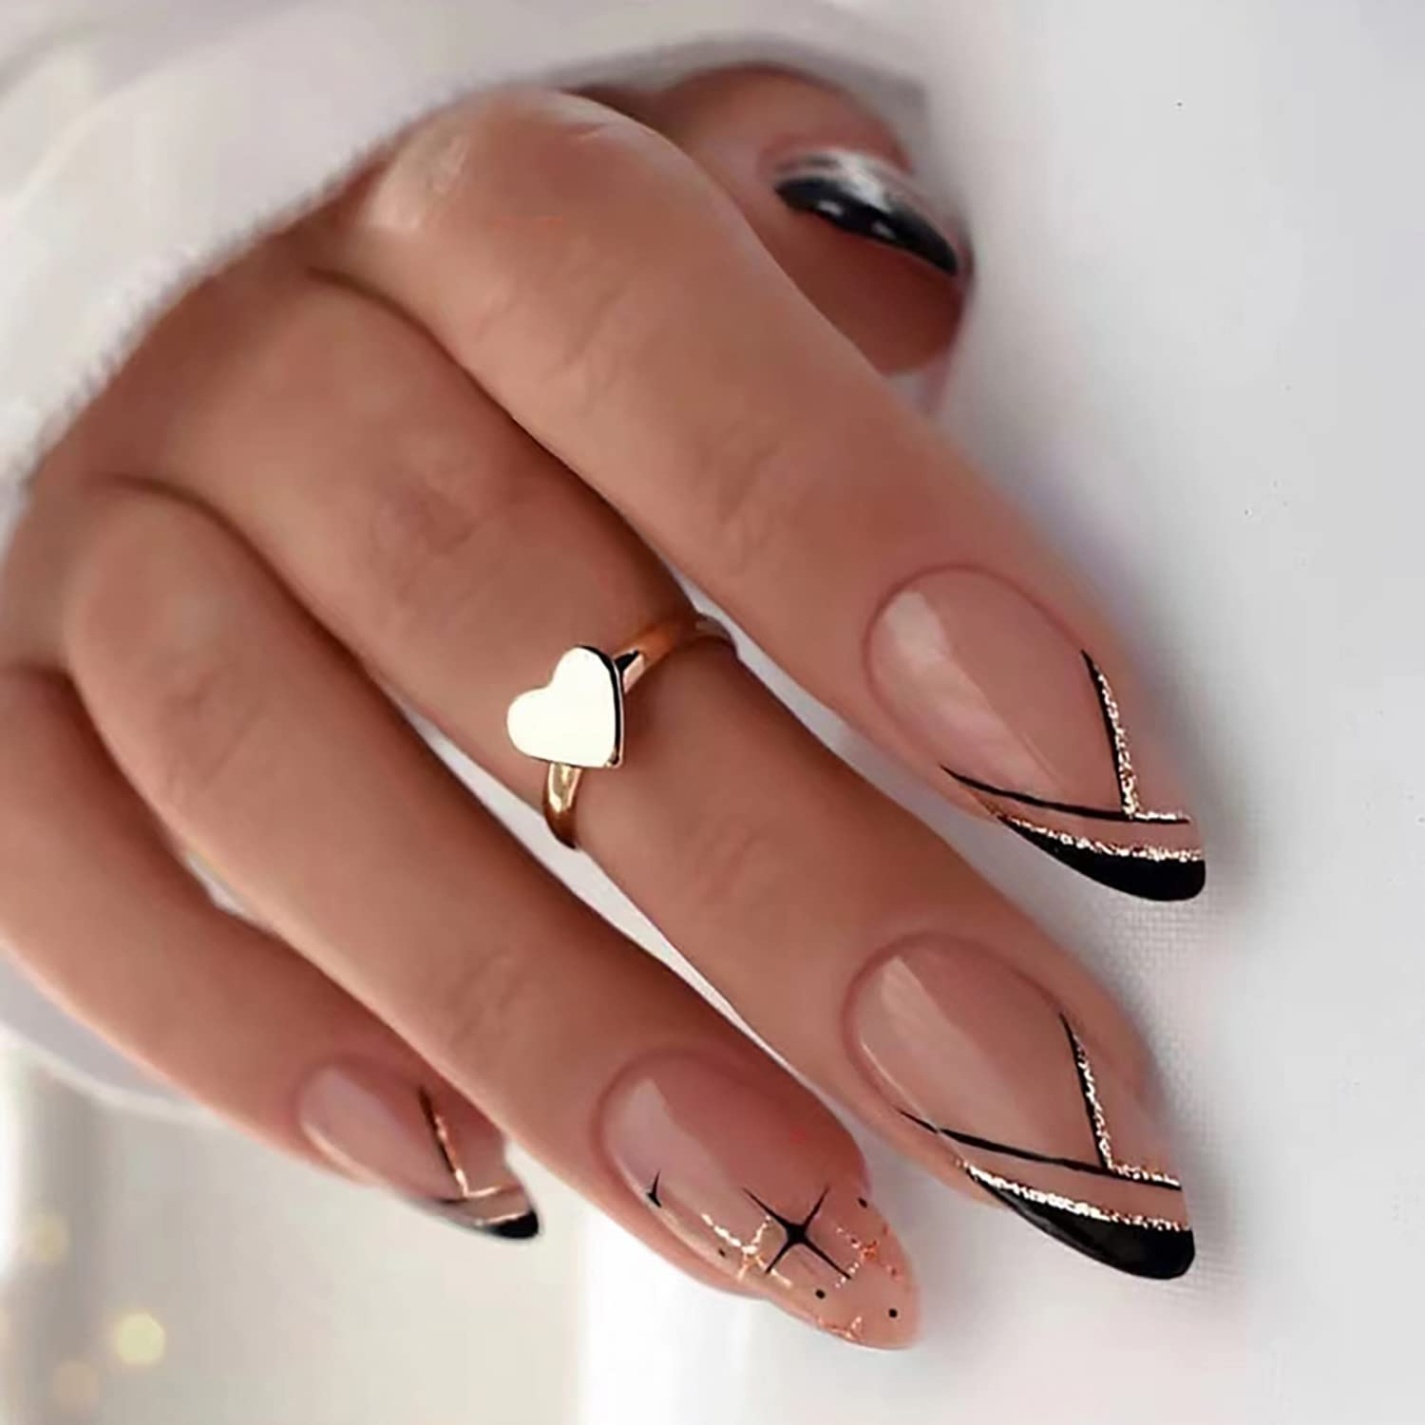 almond french nails design Bulan 5 m.media-amazon.com/images/I/lkMIUqKlL